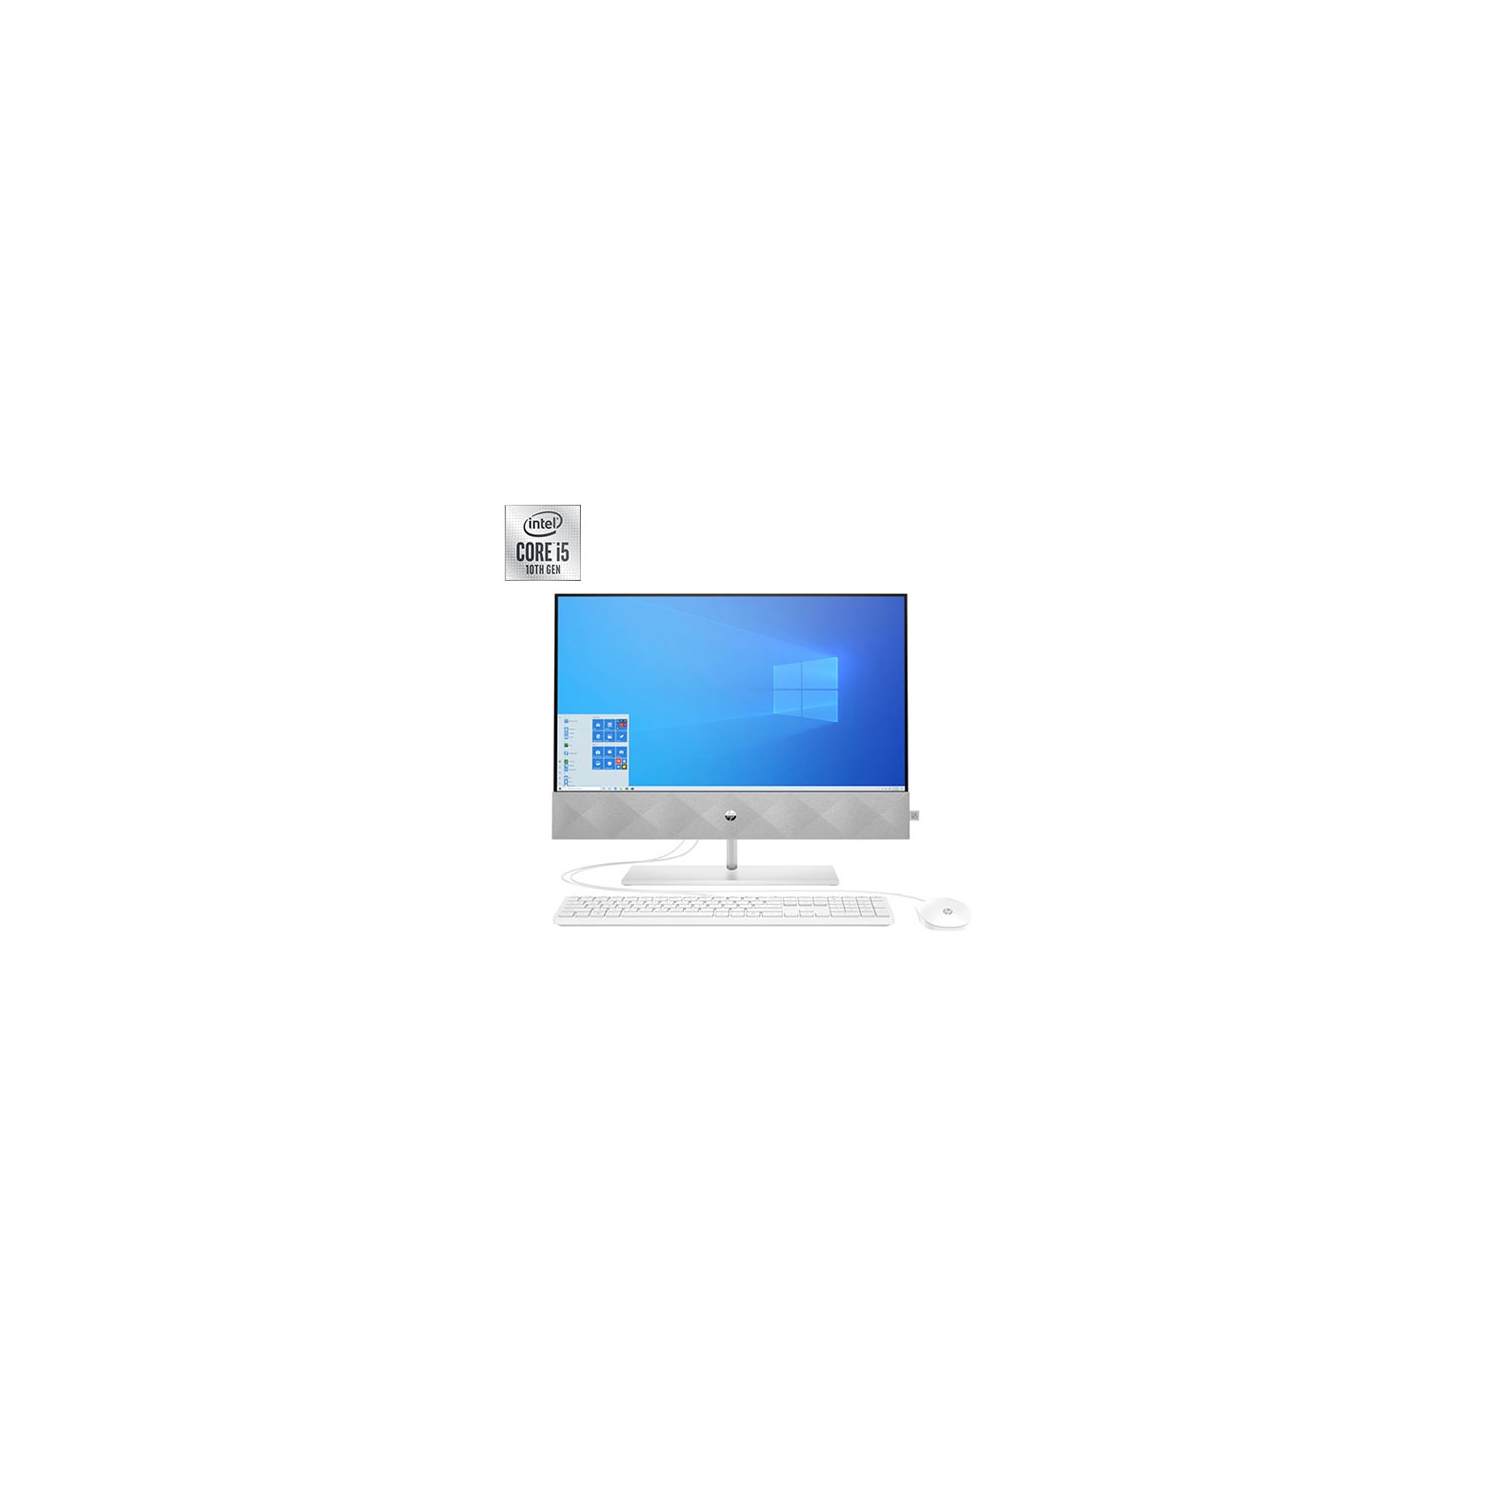 HP Pavilion 24" All-in-One Desktop - White (Intel i5-10400T/512GB SSD/12GB RAM/Windows 10) - English - Open Box